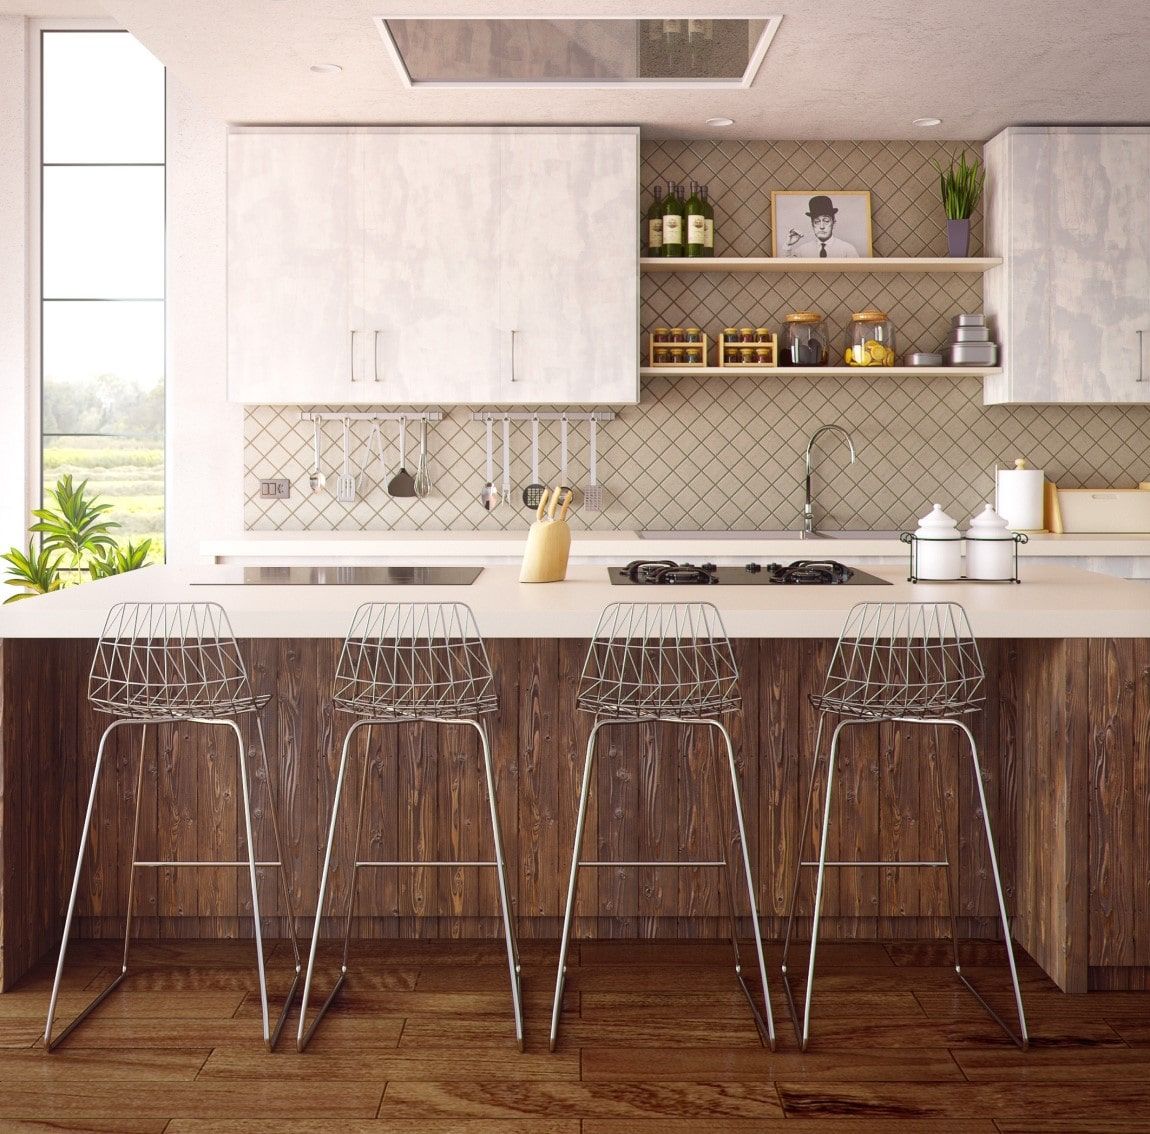 kitchen floor wood texture